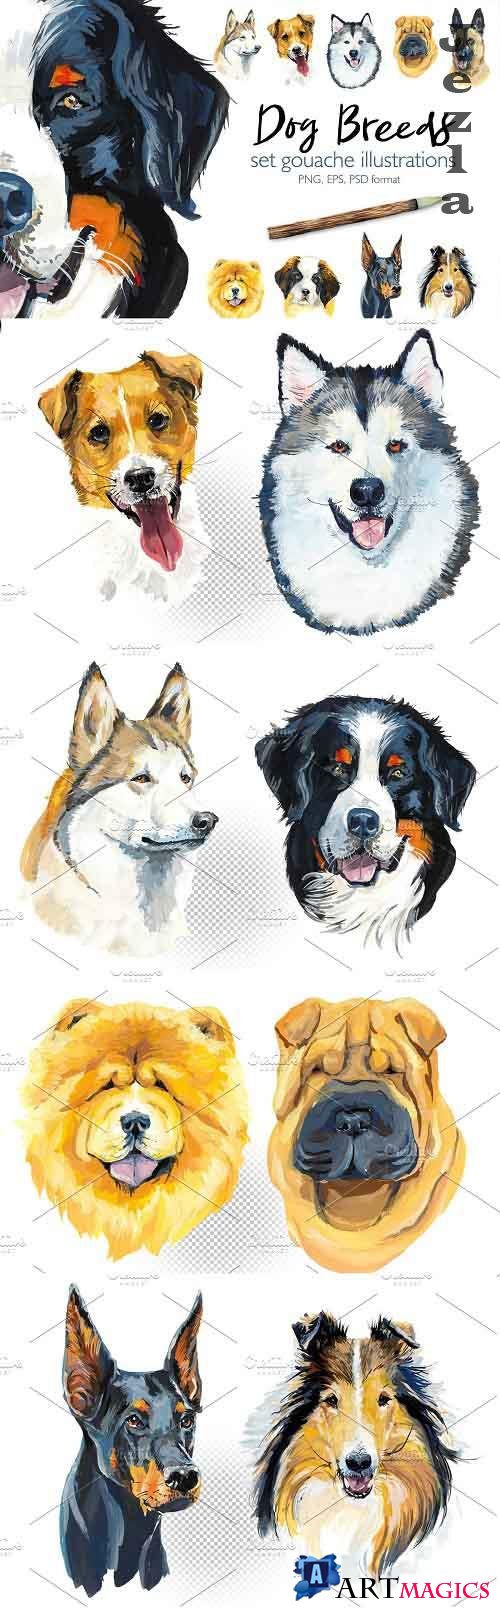 Dog breeds - 3716953